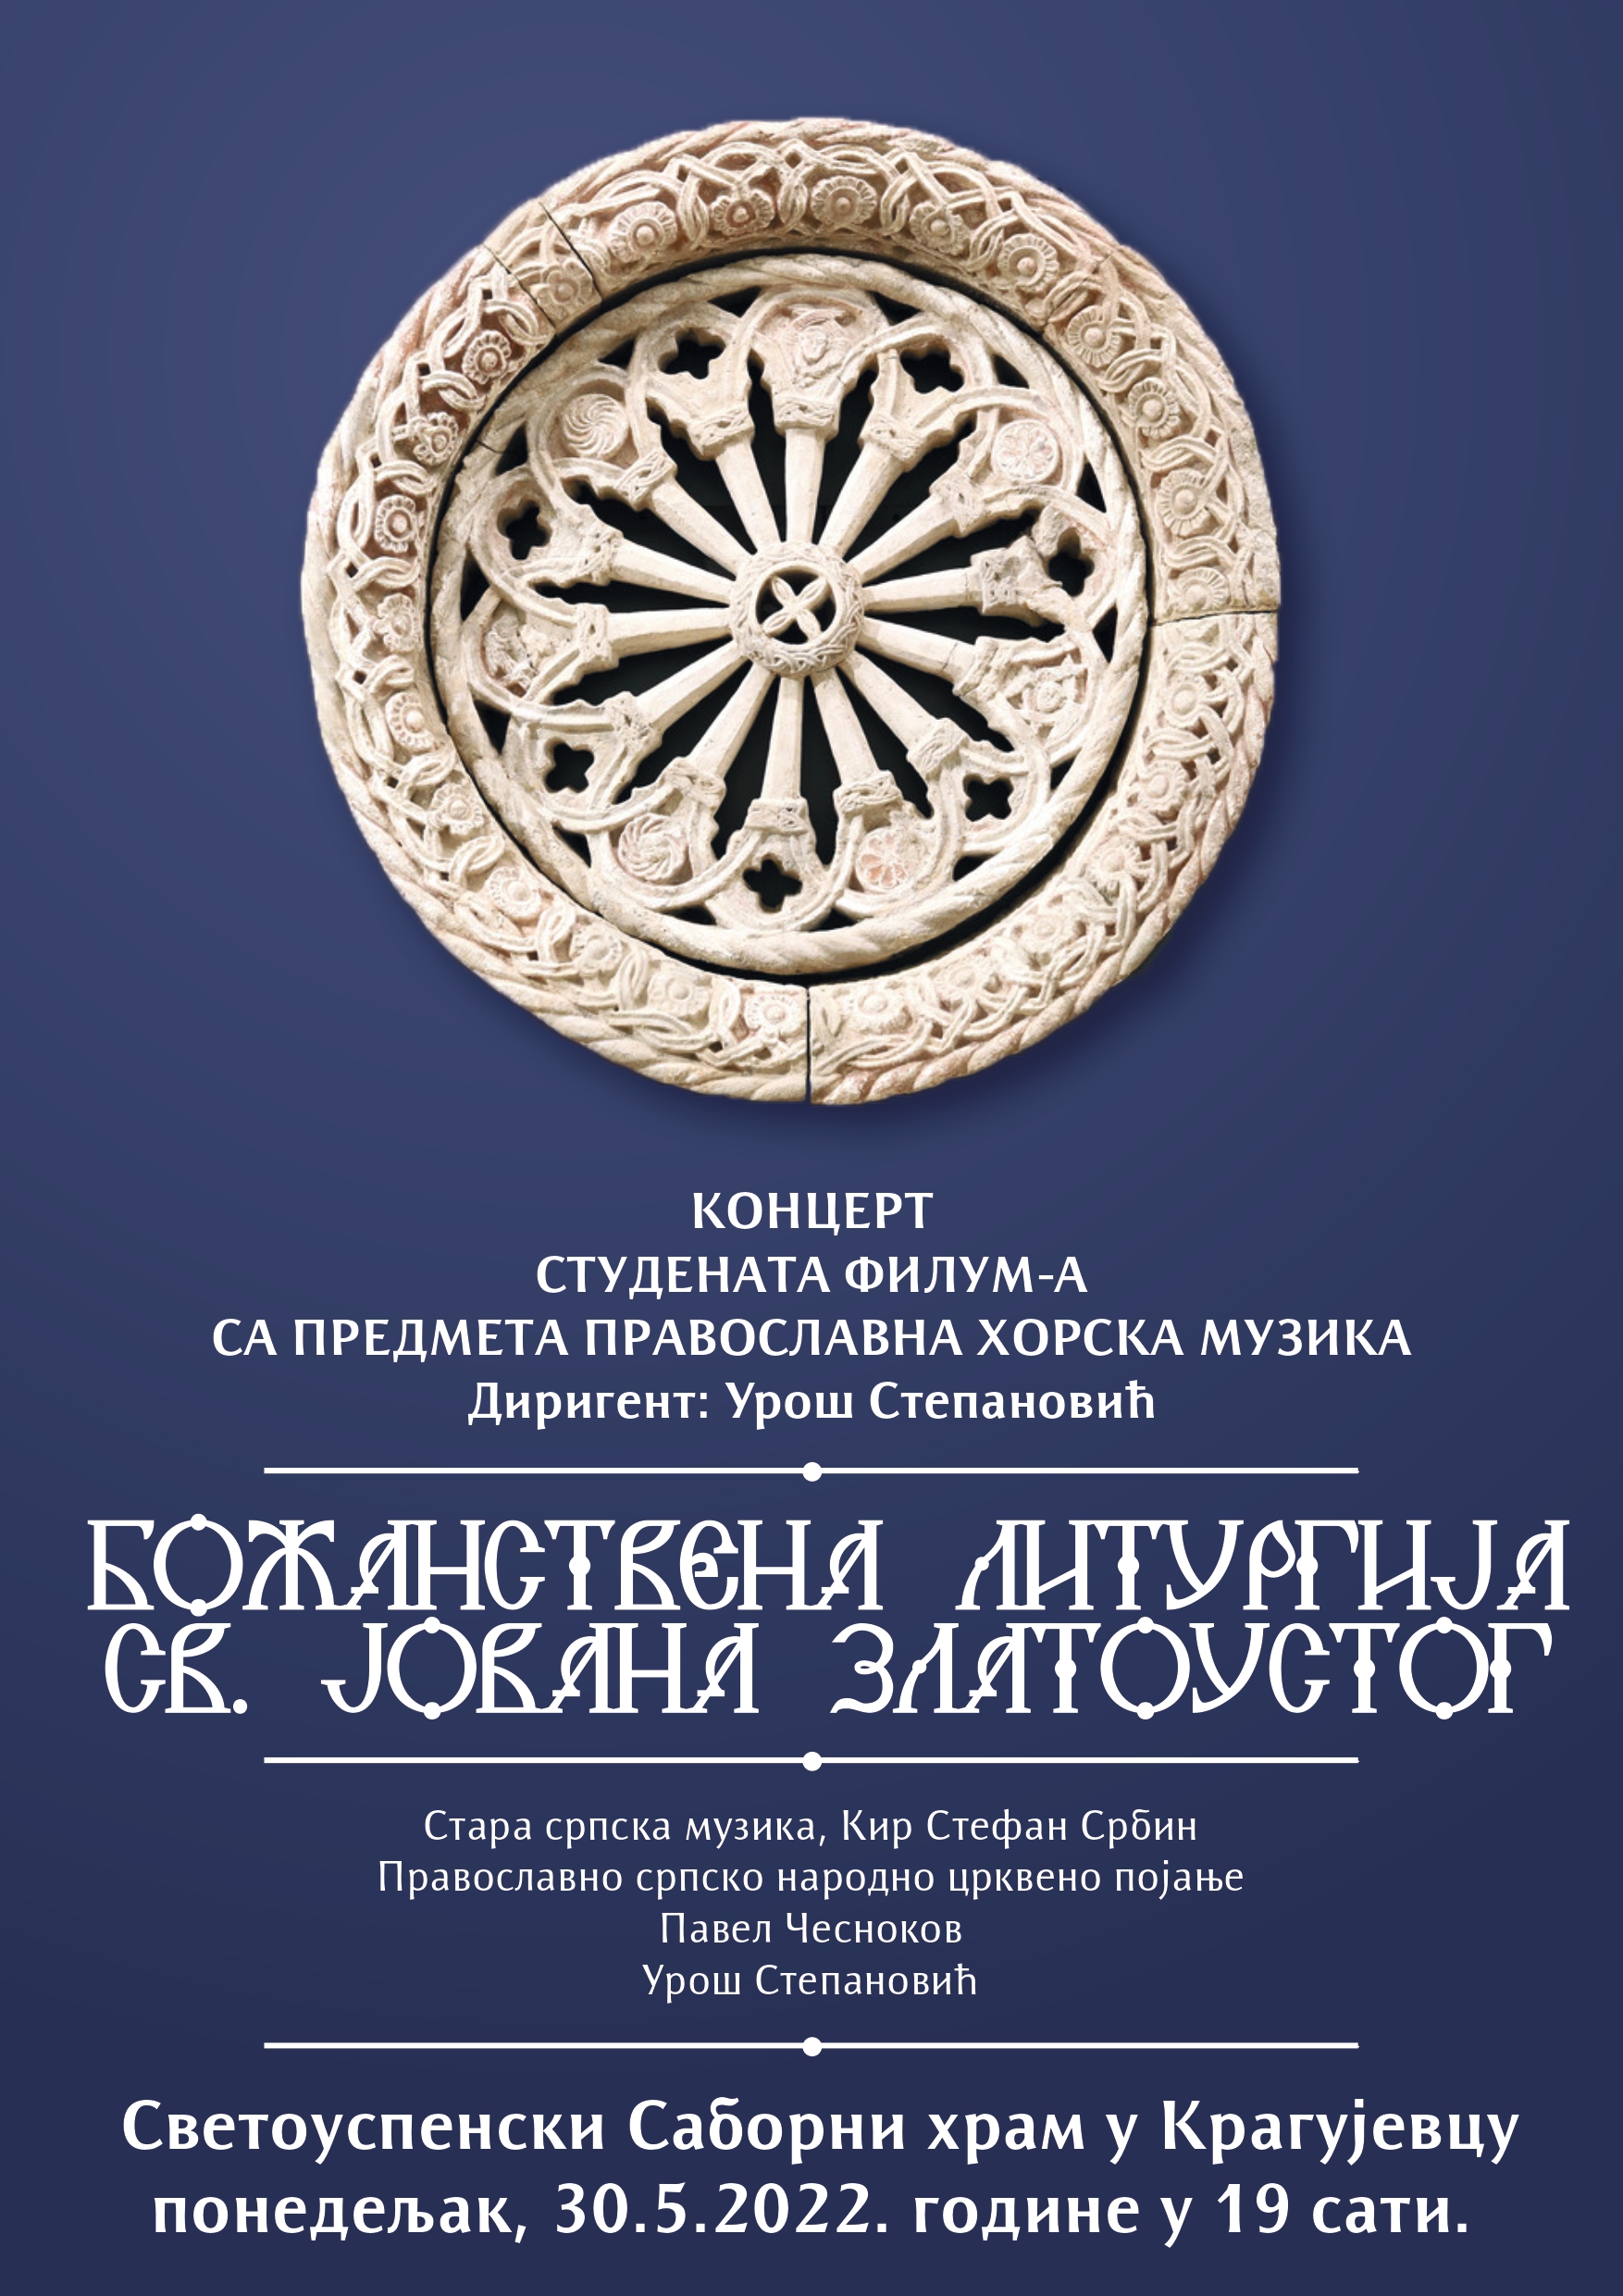 Православна хорска музика page 0001